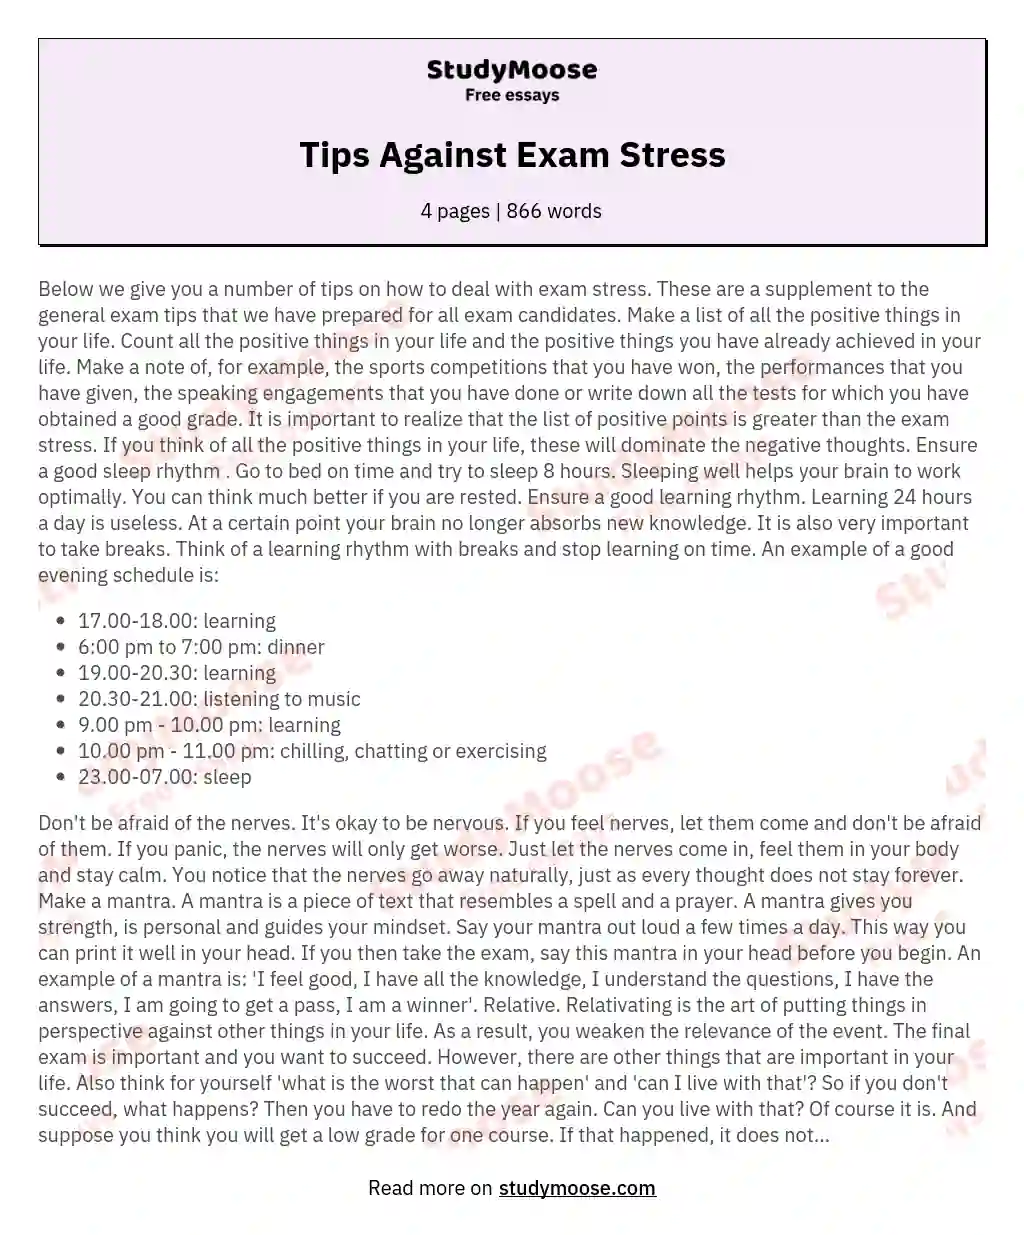 Tips Against Exam Stress